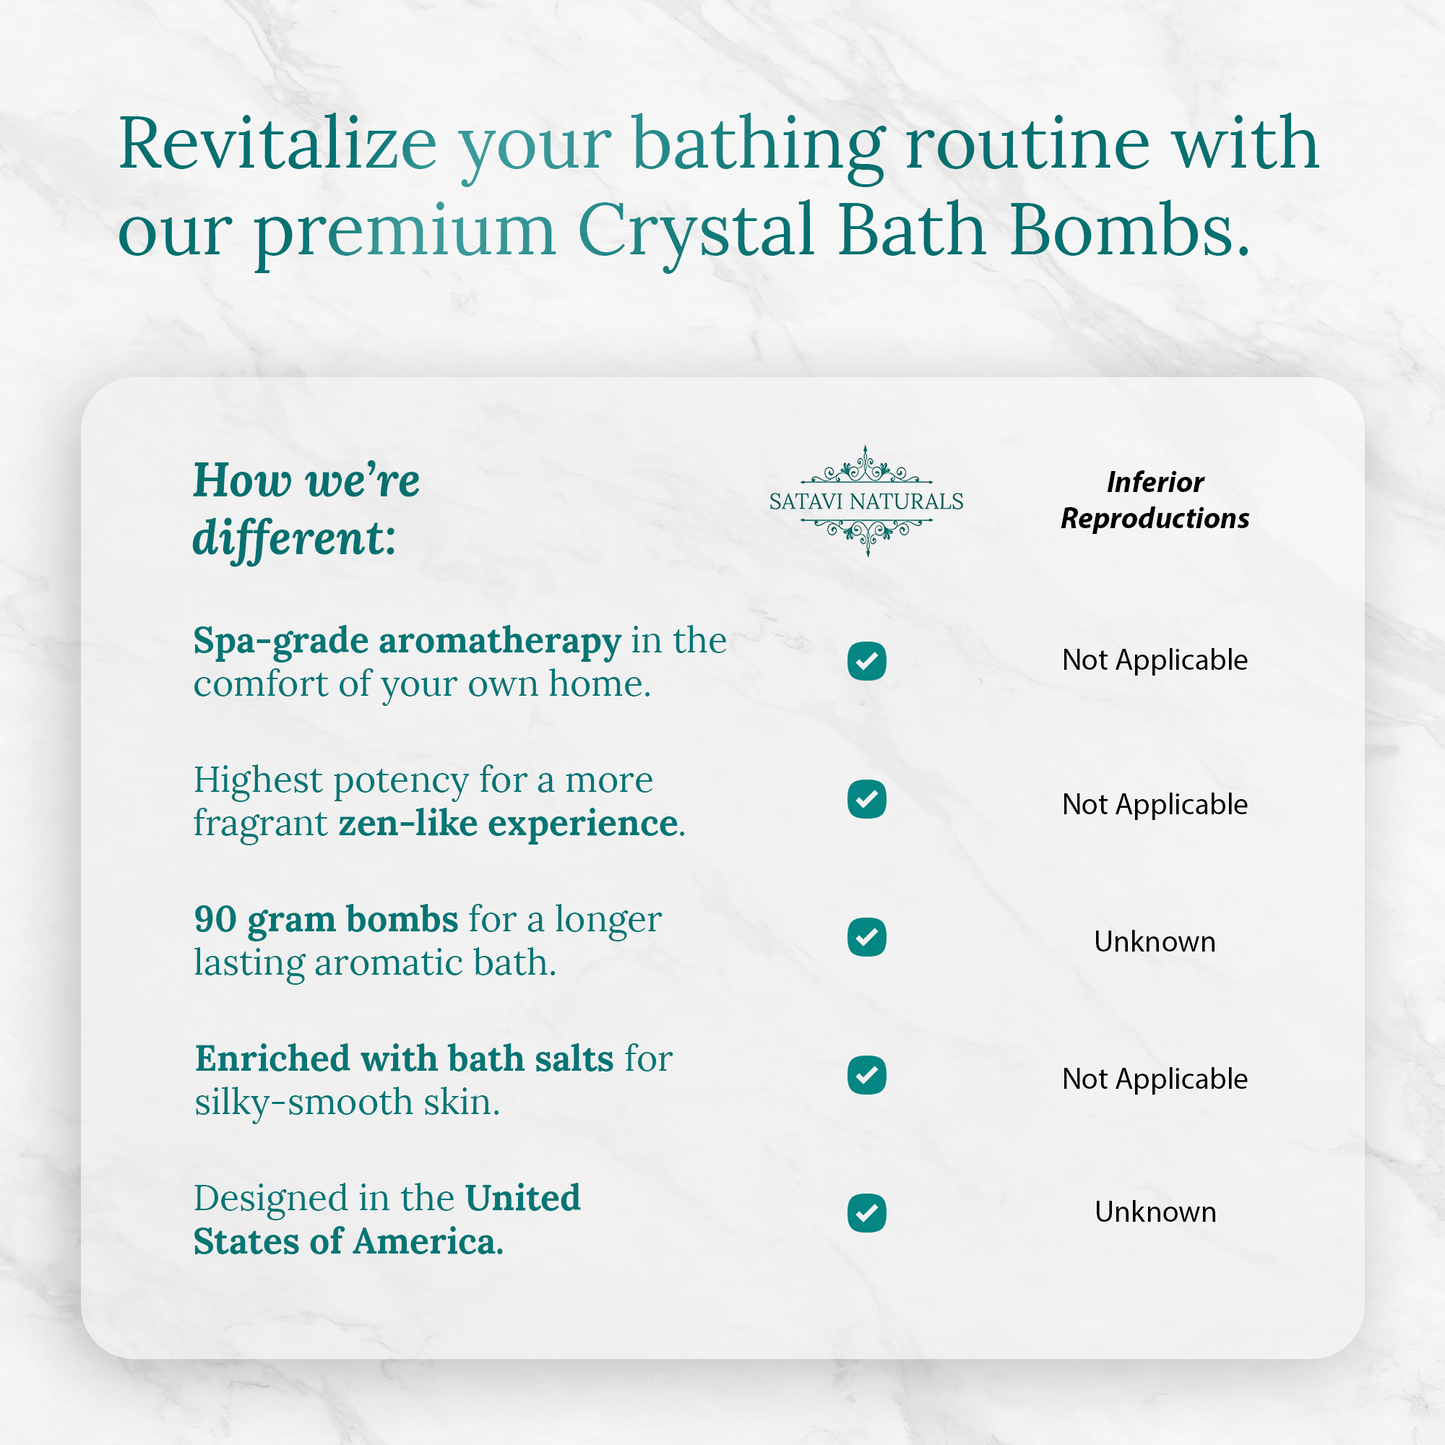 Crystal Bath Bombs